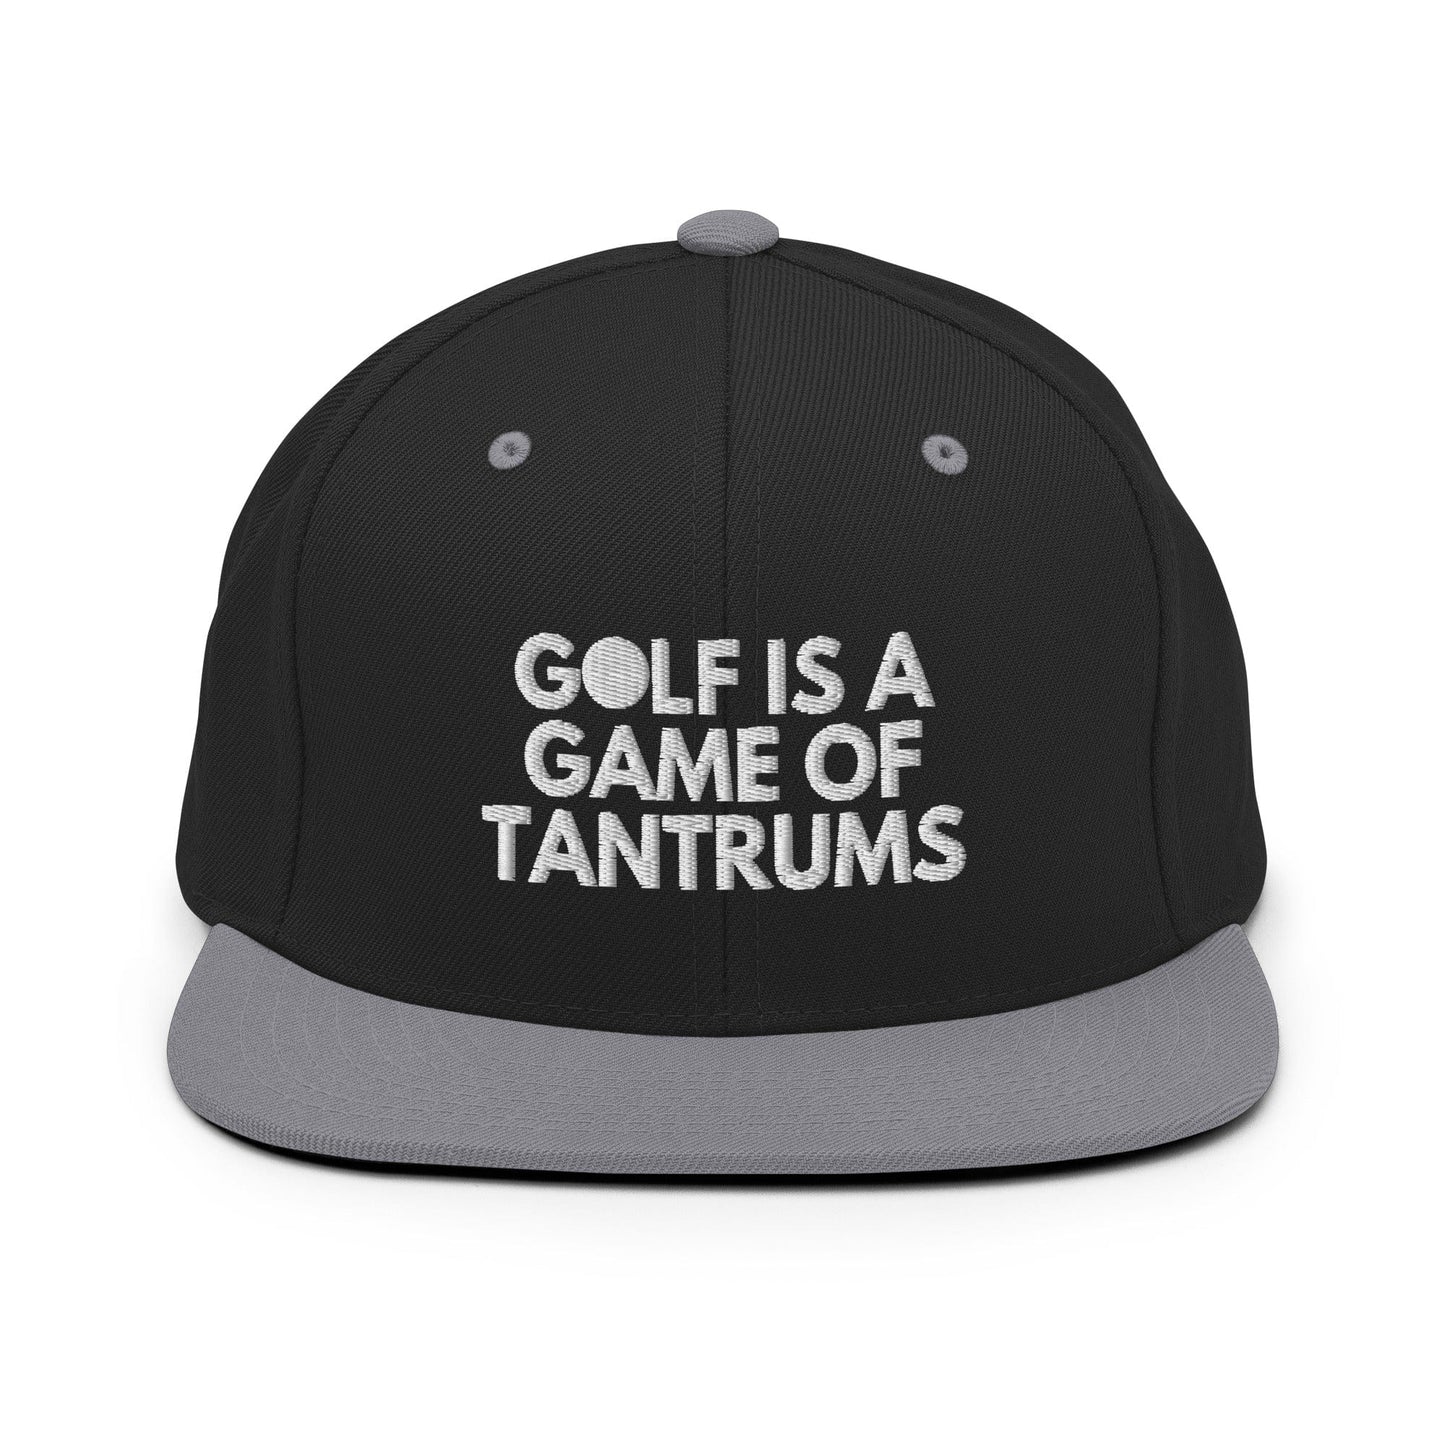 Funny Golfer Gifts  Snapback Hat Black/ Silver Golf Is A Game Of Tantrums Hat Snapback Hat